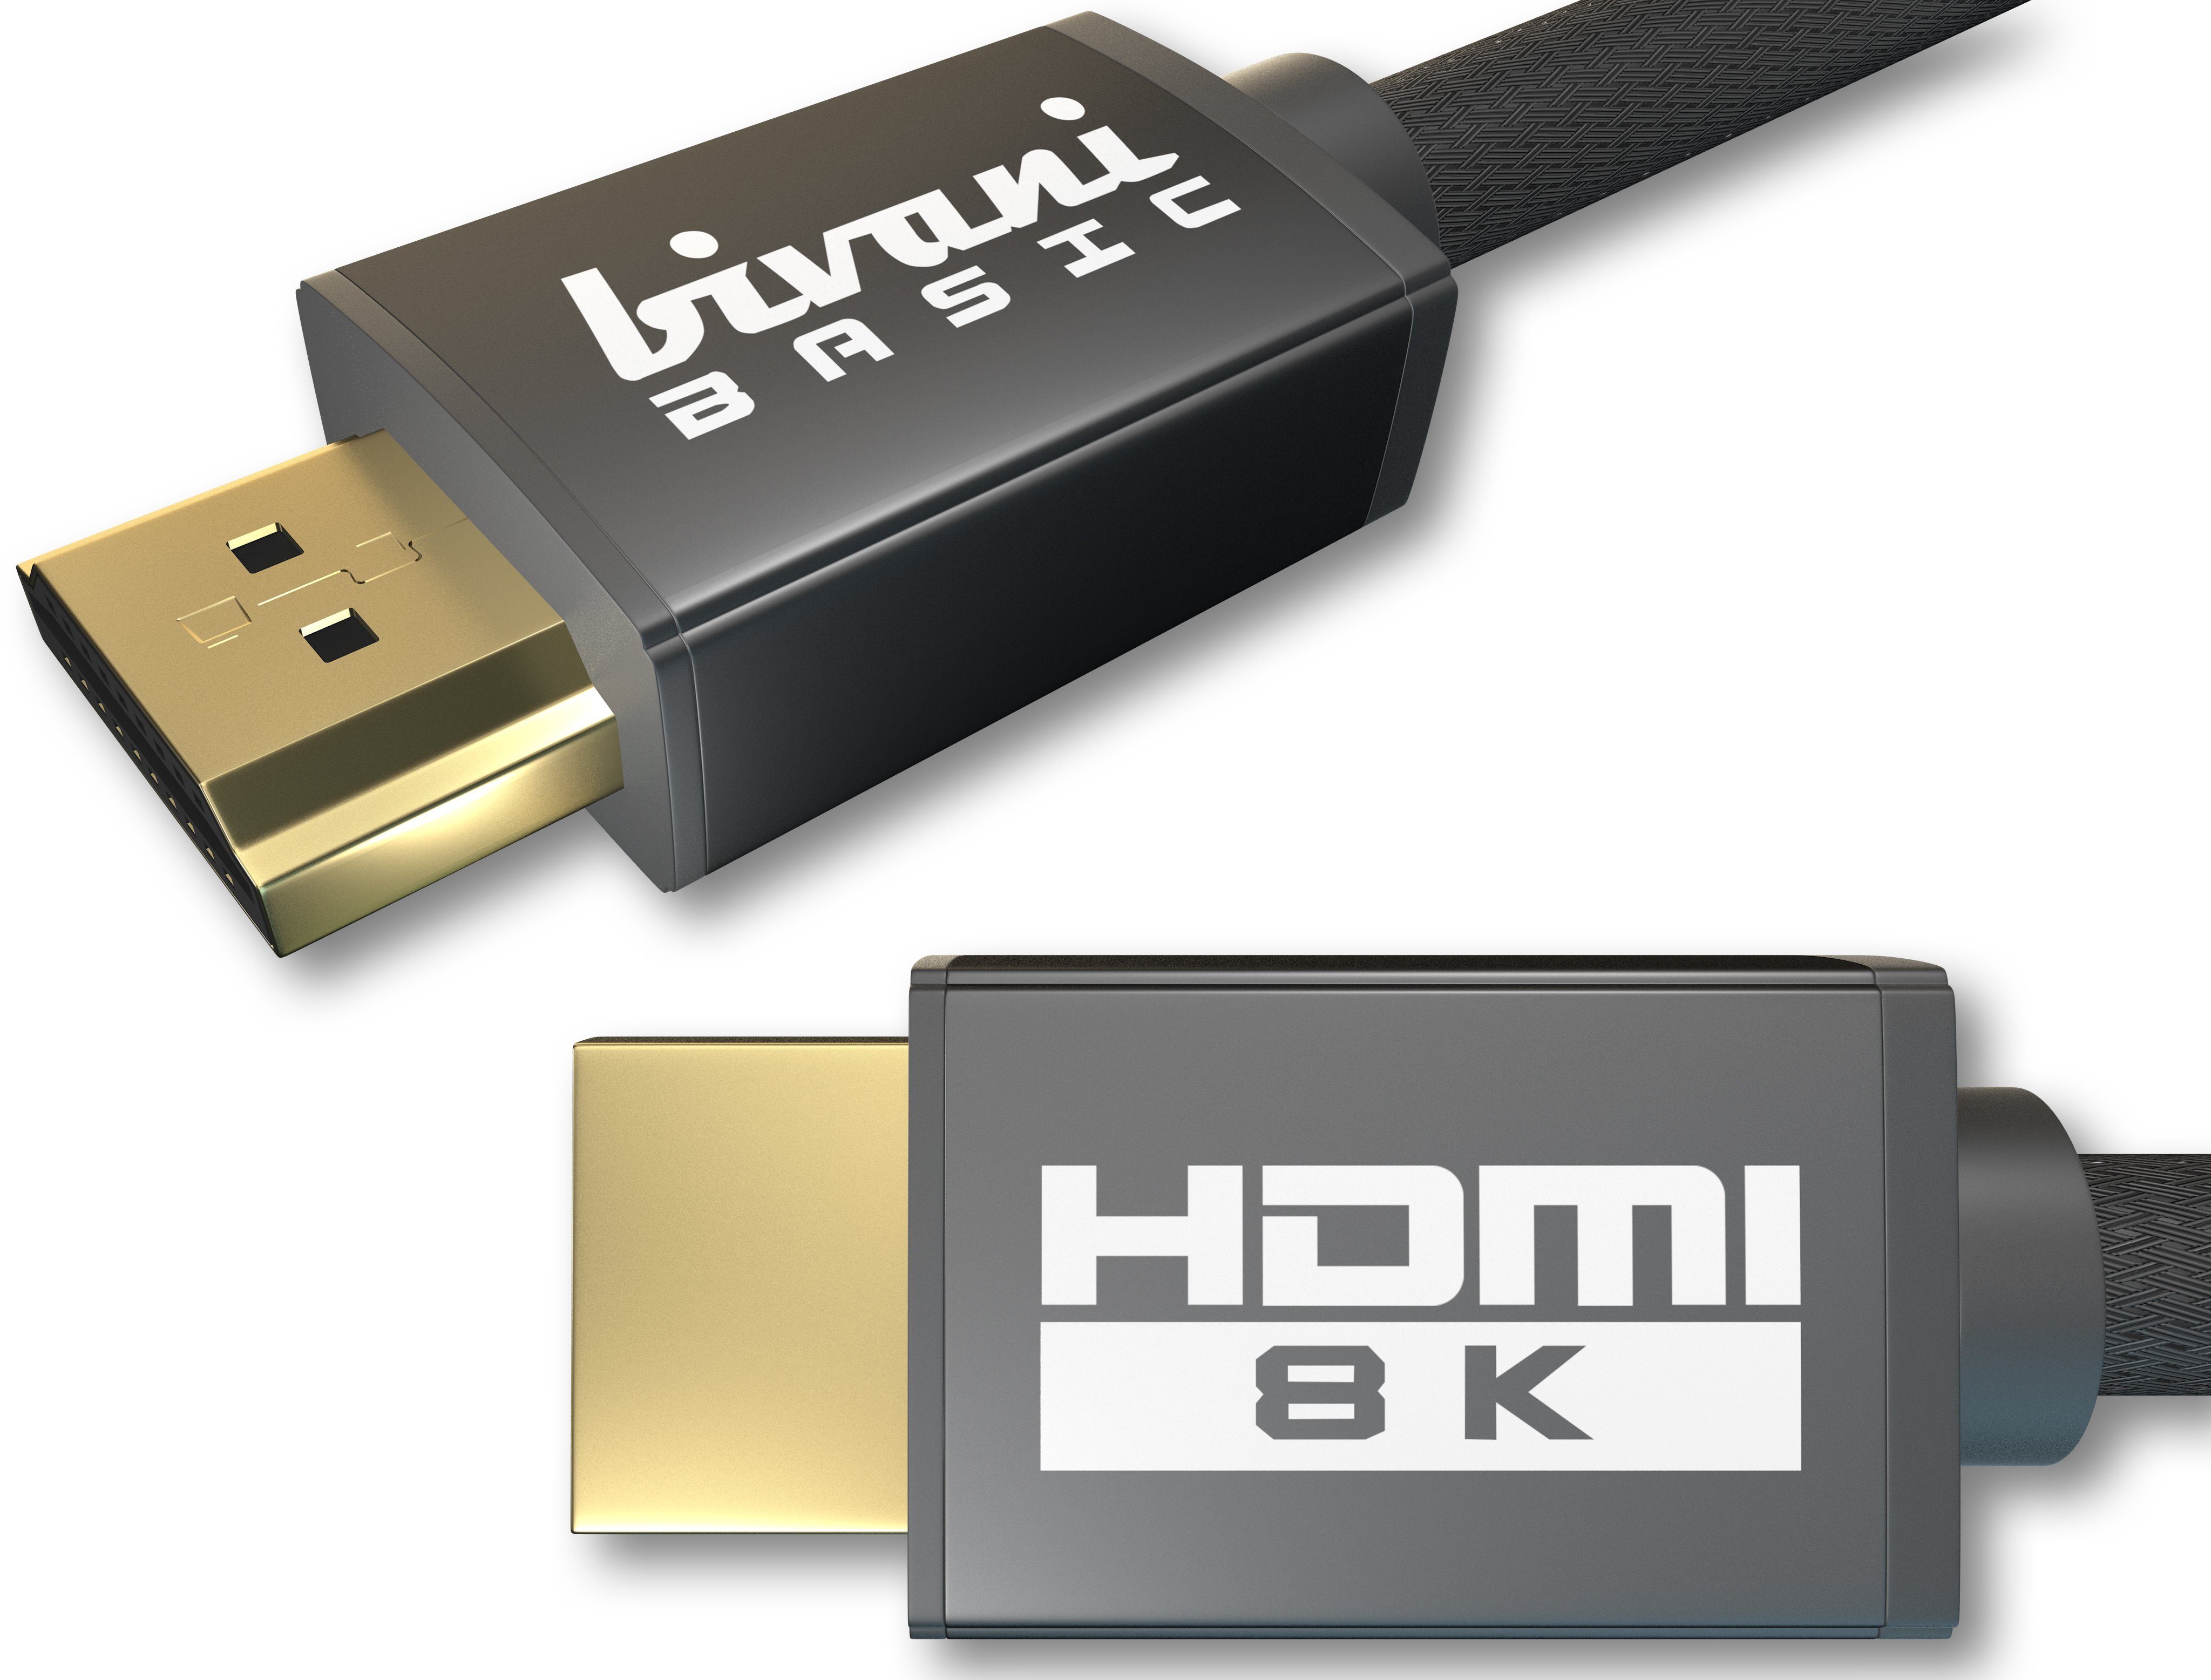 CEC, Typ VRR, bivani HDCP, Series 48 cm), 8K 8K@60HZ, Ready HDMI Ethernet, 4K@120HZ, HDMI-Kabel, PS5 HDMI Xbox Kabel Highspeed & X Gbps, 10K, 2.1a bis HDR10+, A HDMI, (100 eARC,